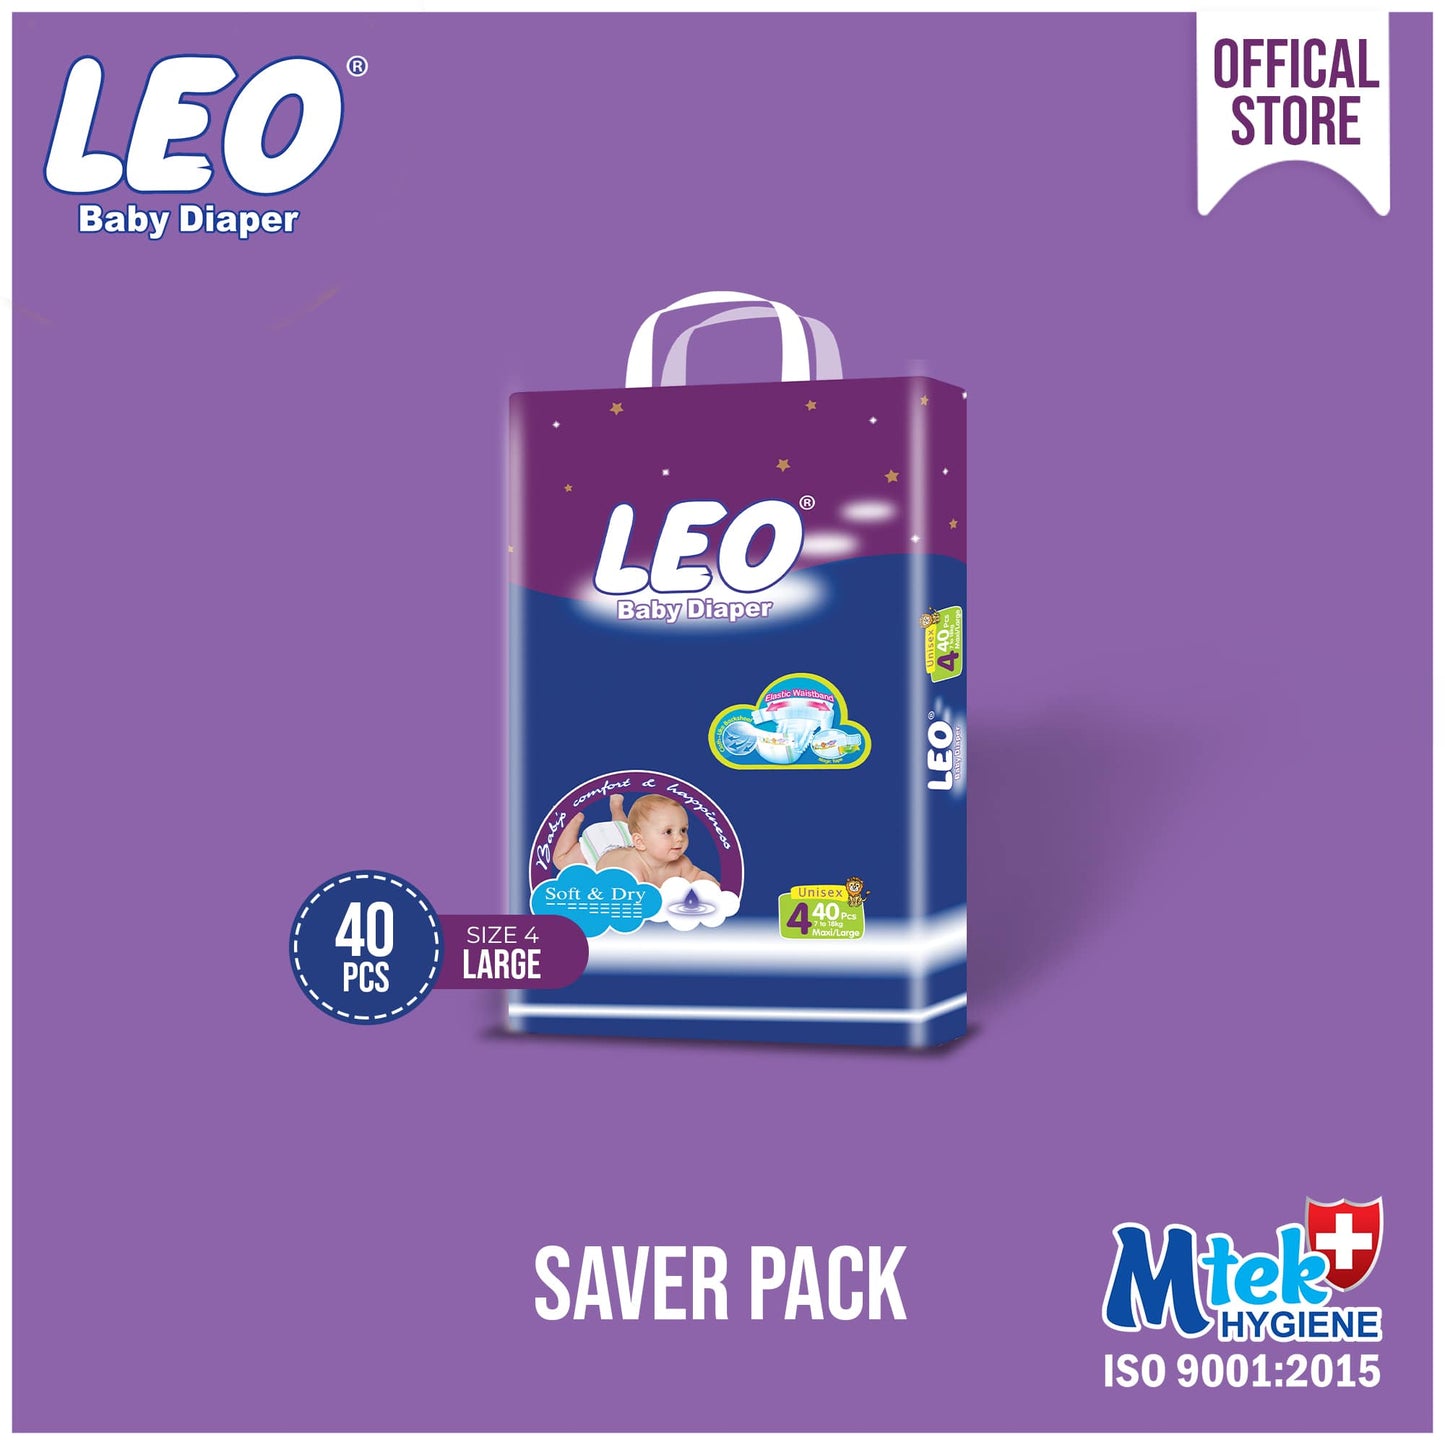 Leo Saver Pack Baby Diaper – Size 4, Large – 40 Pcs